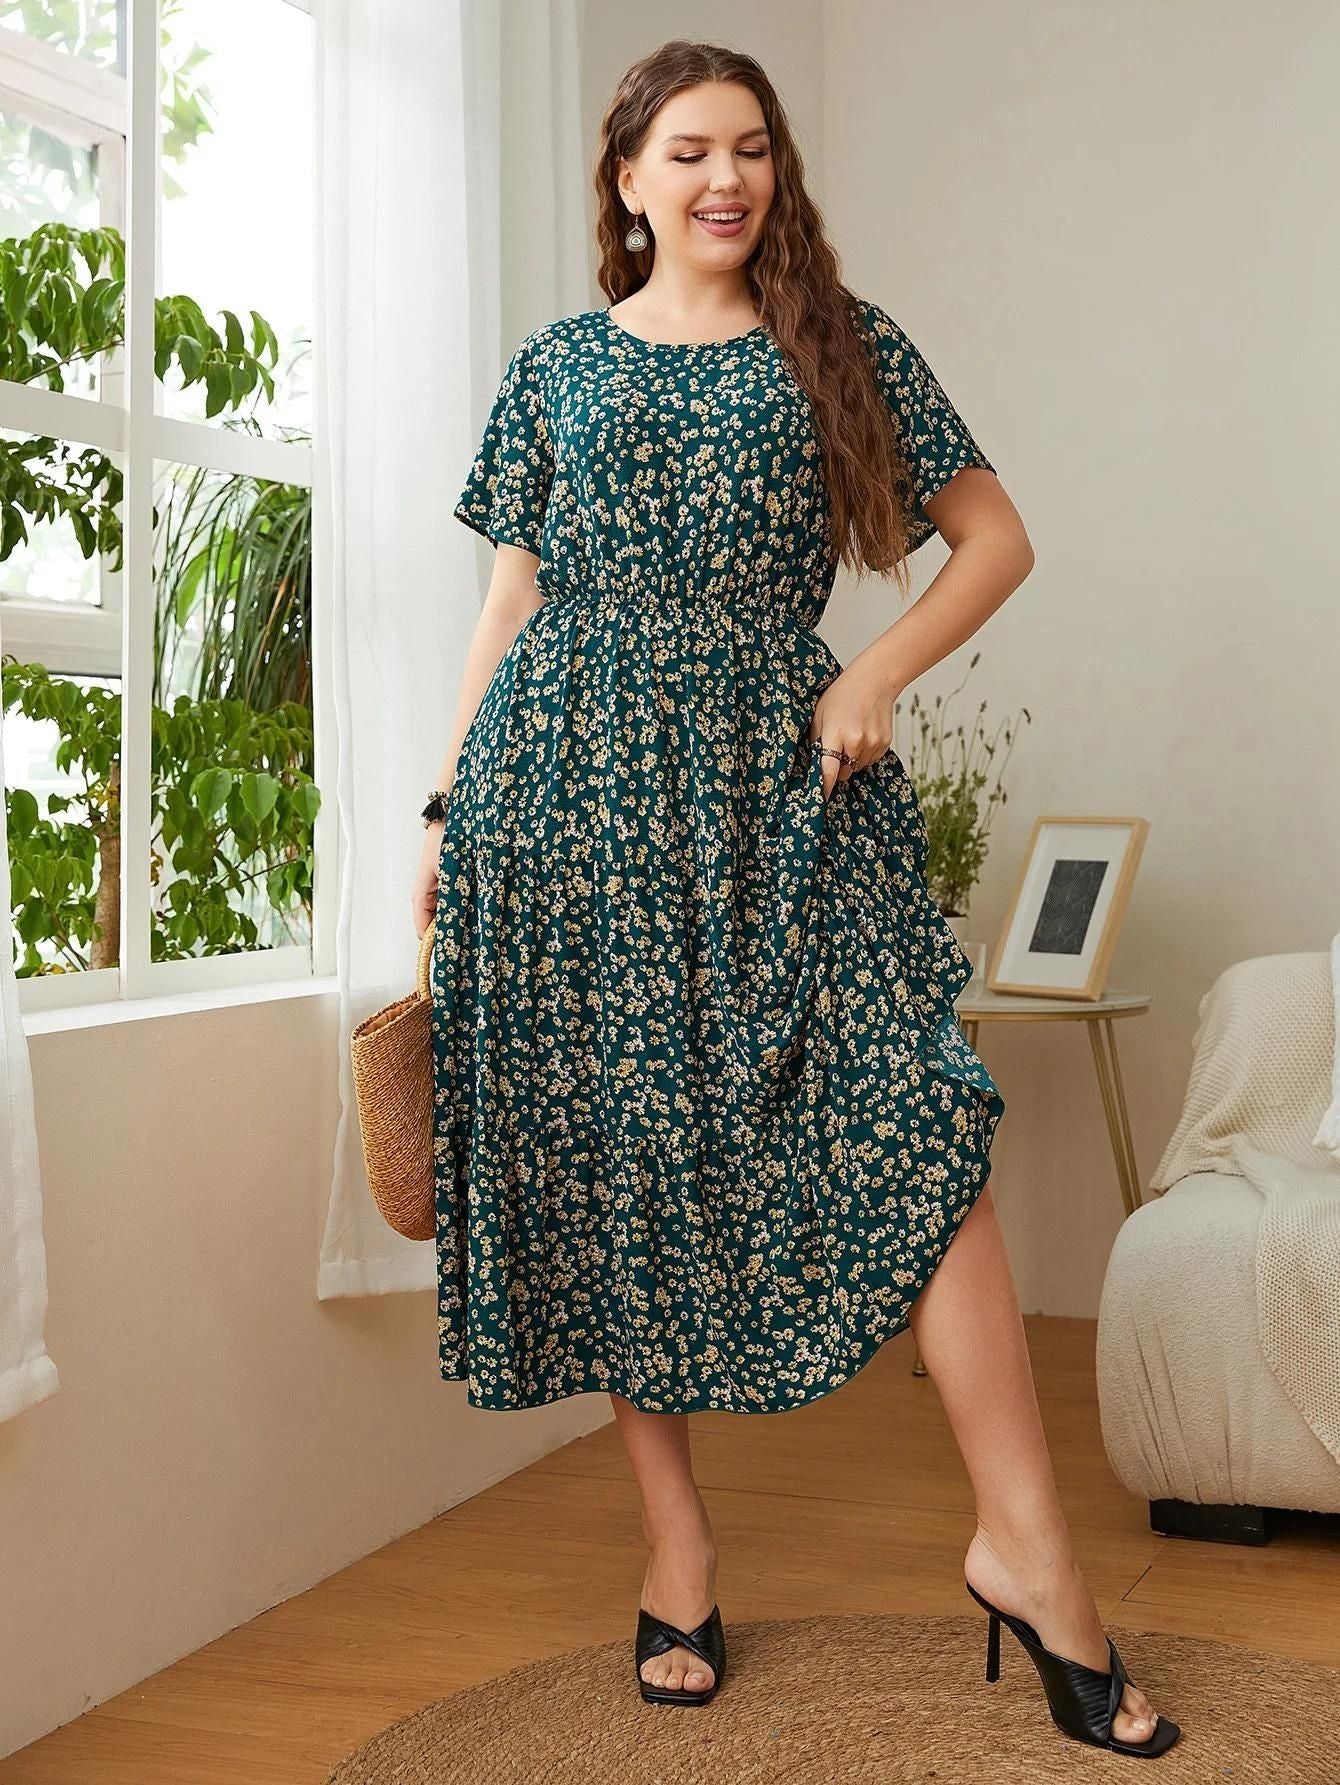 Elegant summer dress with floral pattern, slimming effect